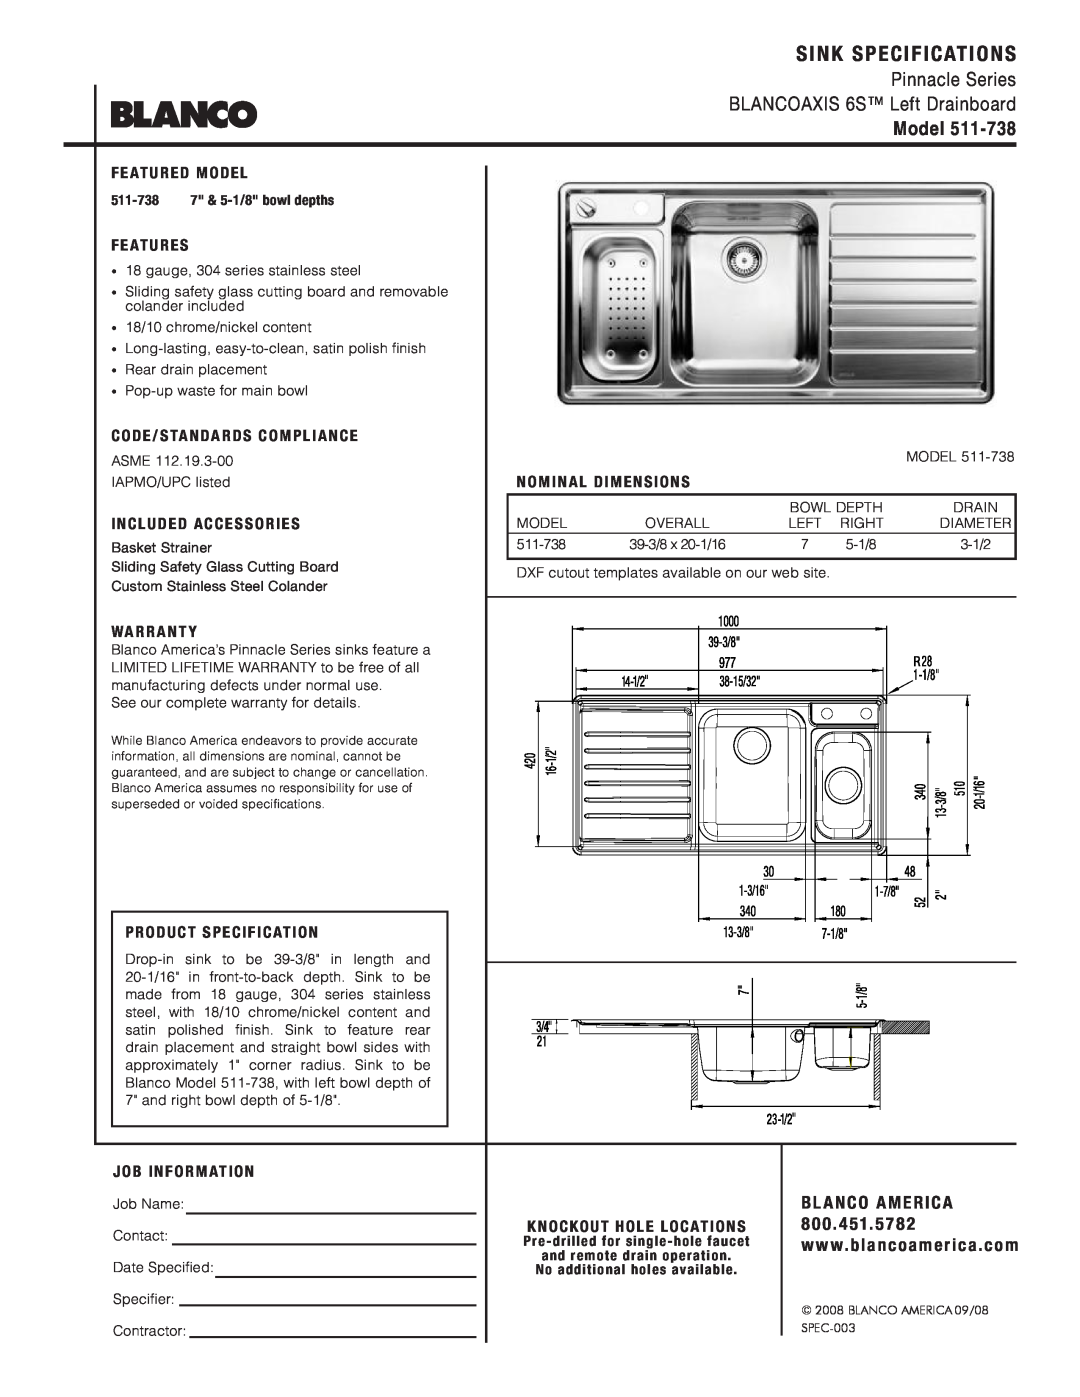 Blanco 511-738 warranty Sink Specifications, Pinnacle Series BLANCOAXIS 6S Left Drainboard, Model, Bl Anco America, 8 0 